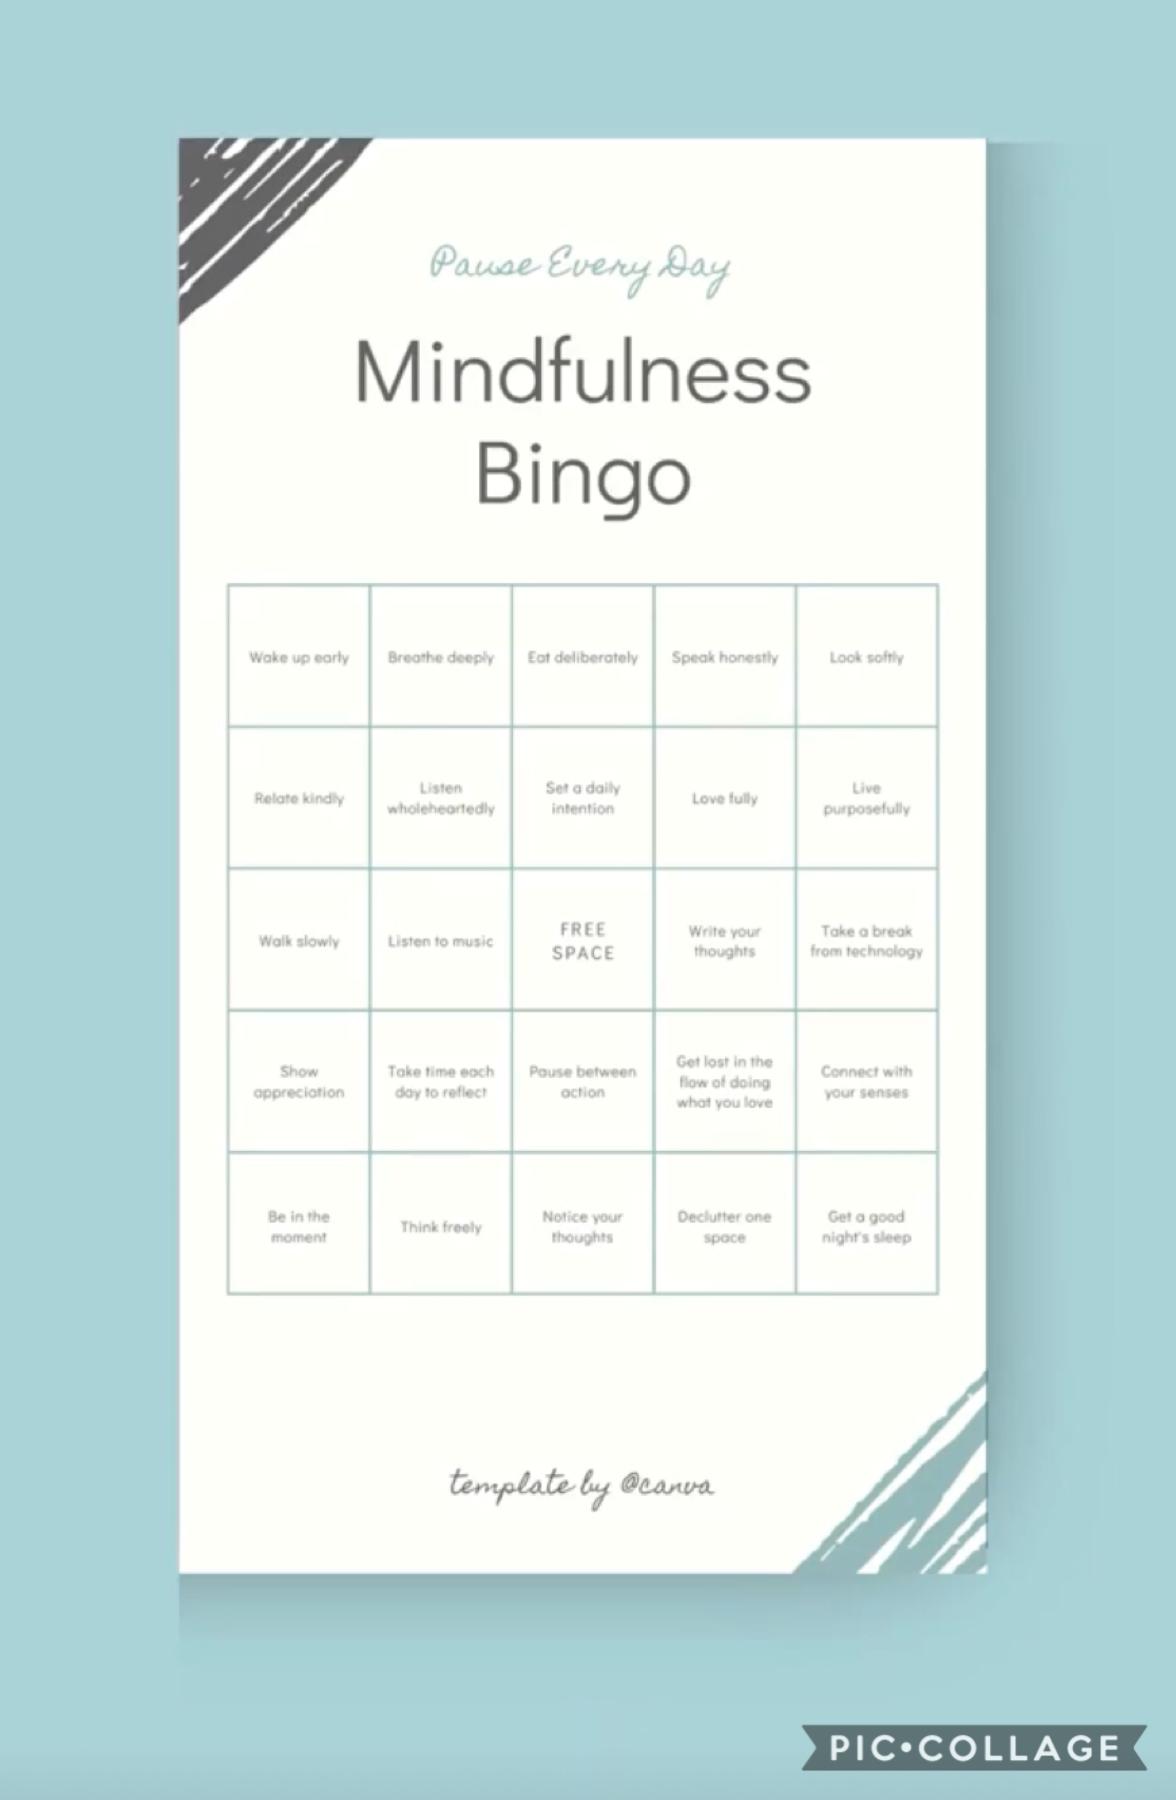 Pause every day mindfulness bingo